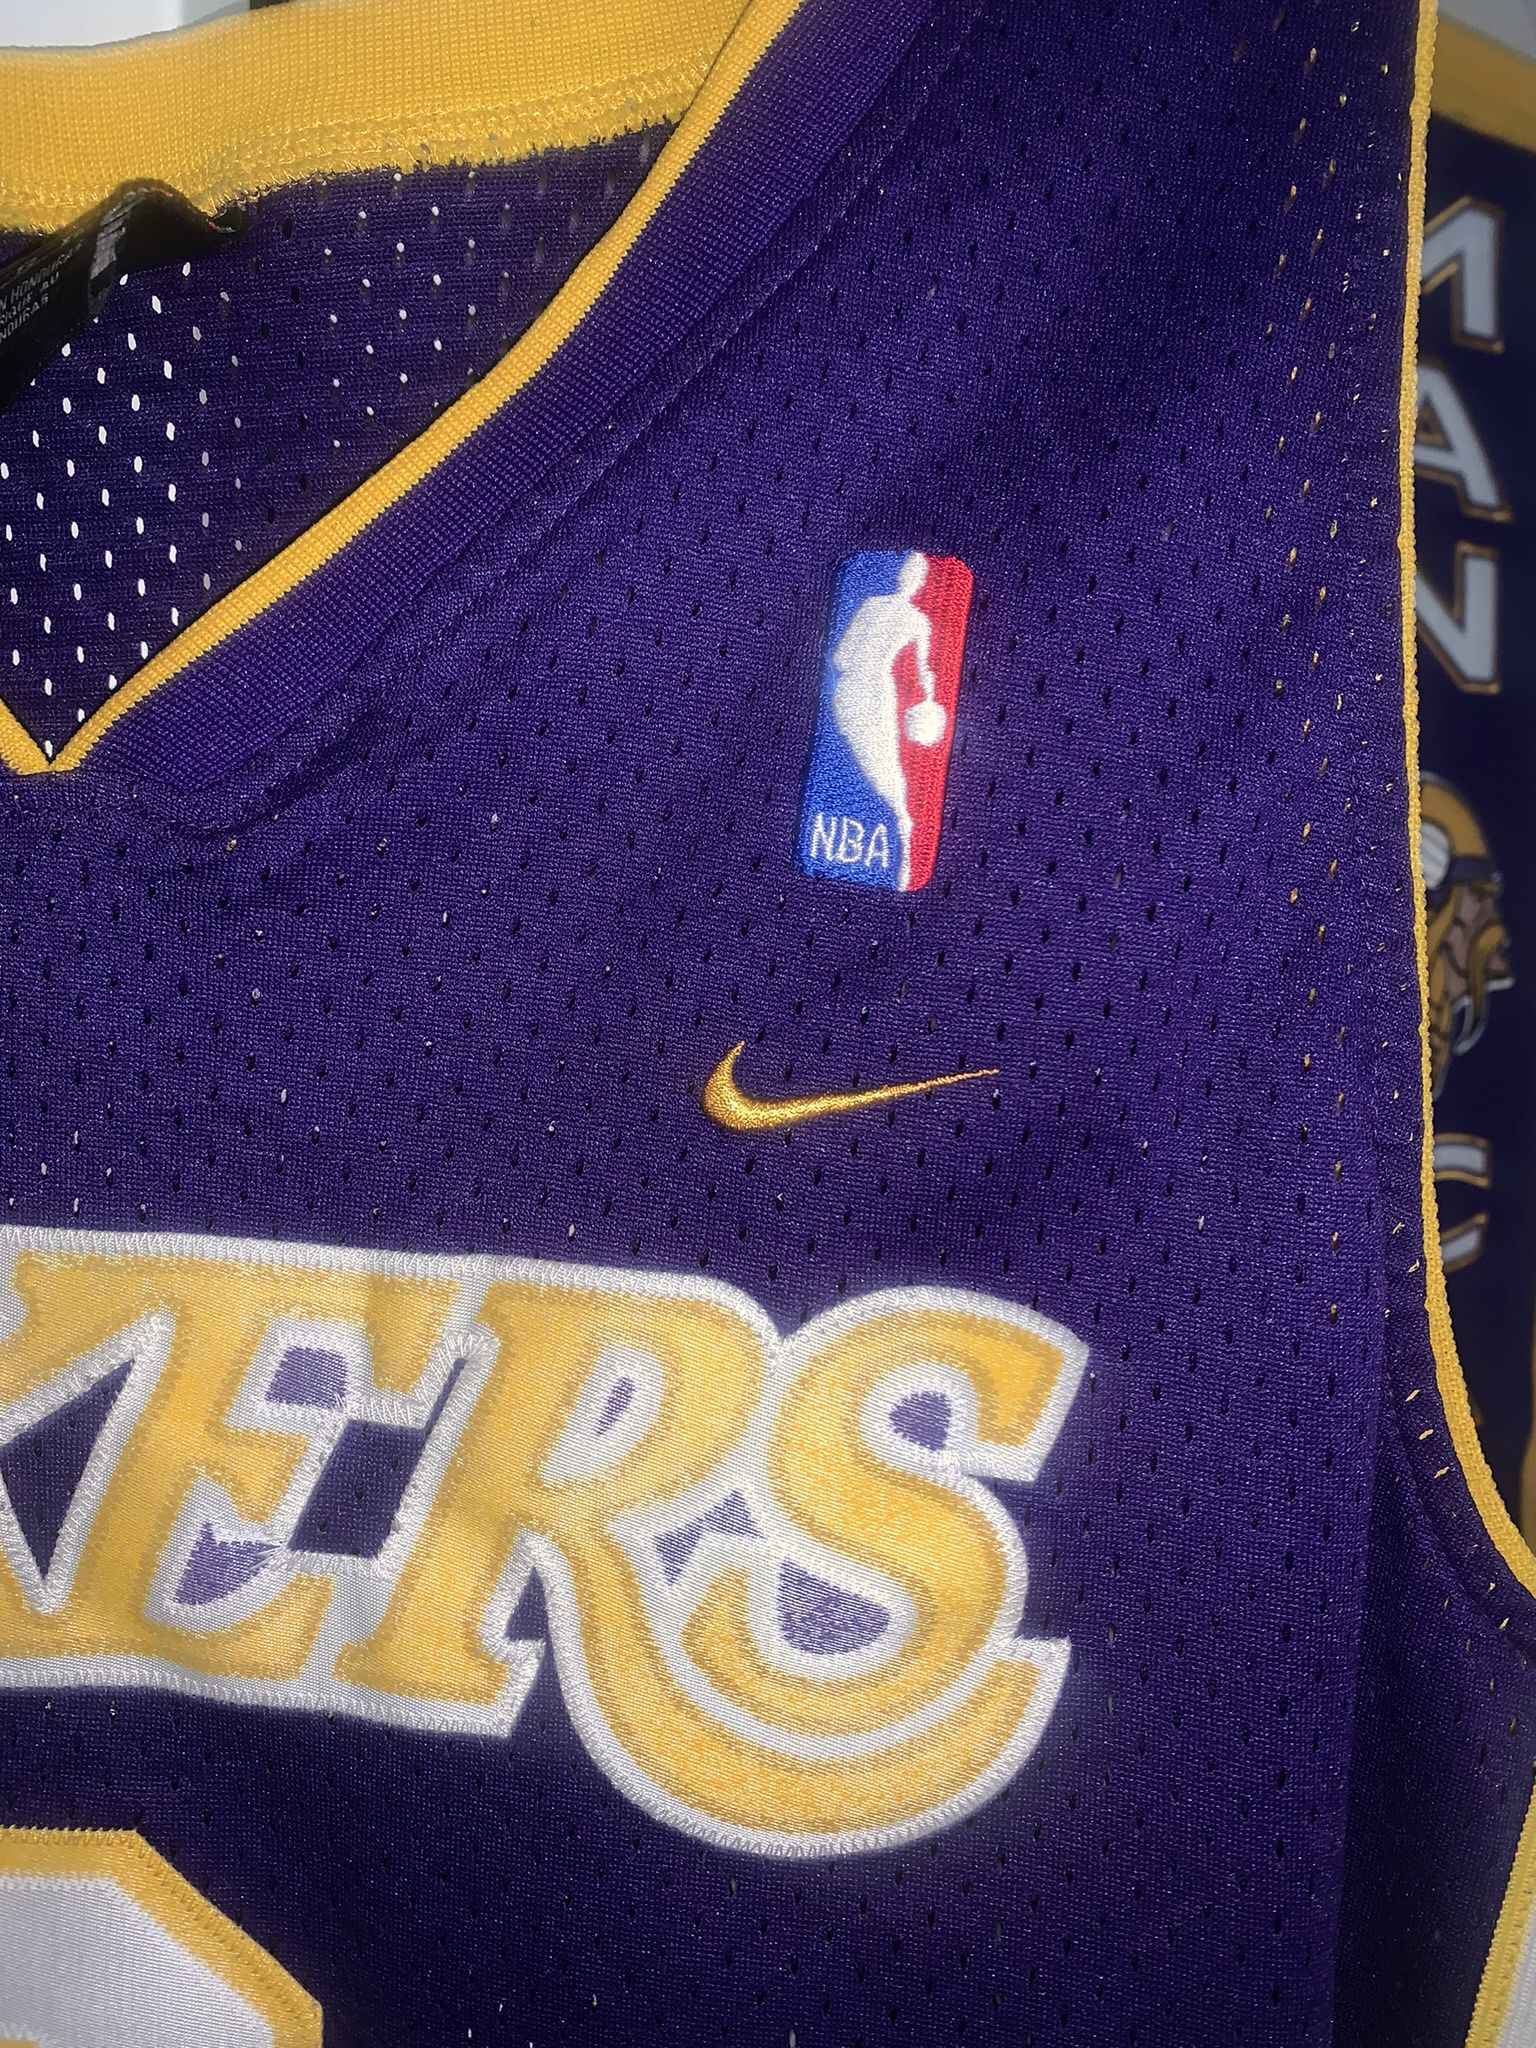 Kobe Bryant Lakers Jersey Size XL  $100 Obo 